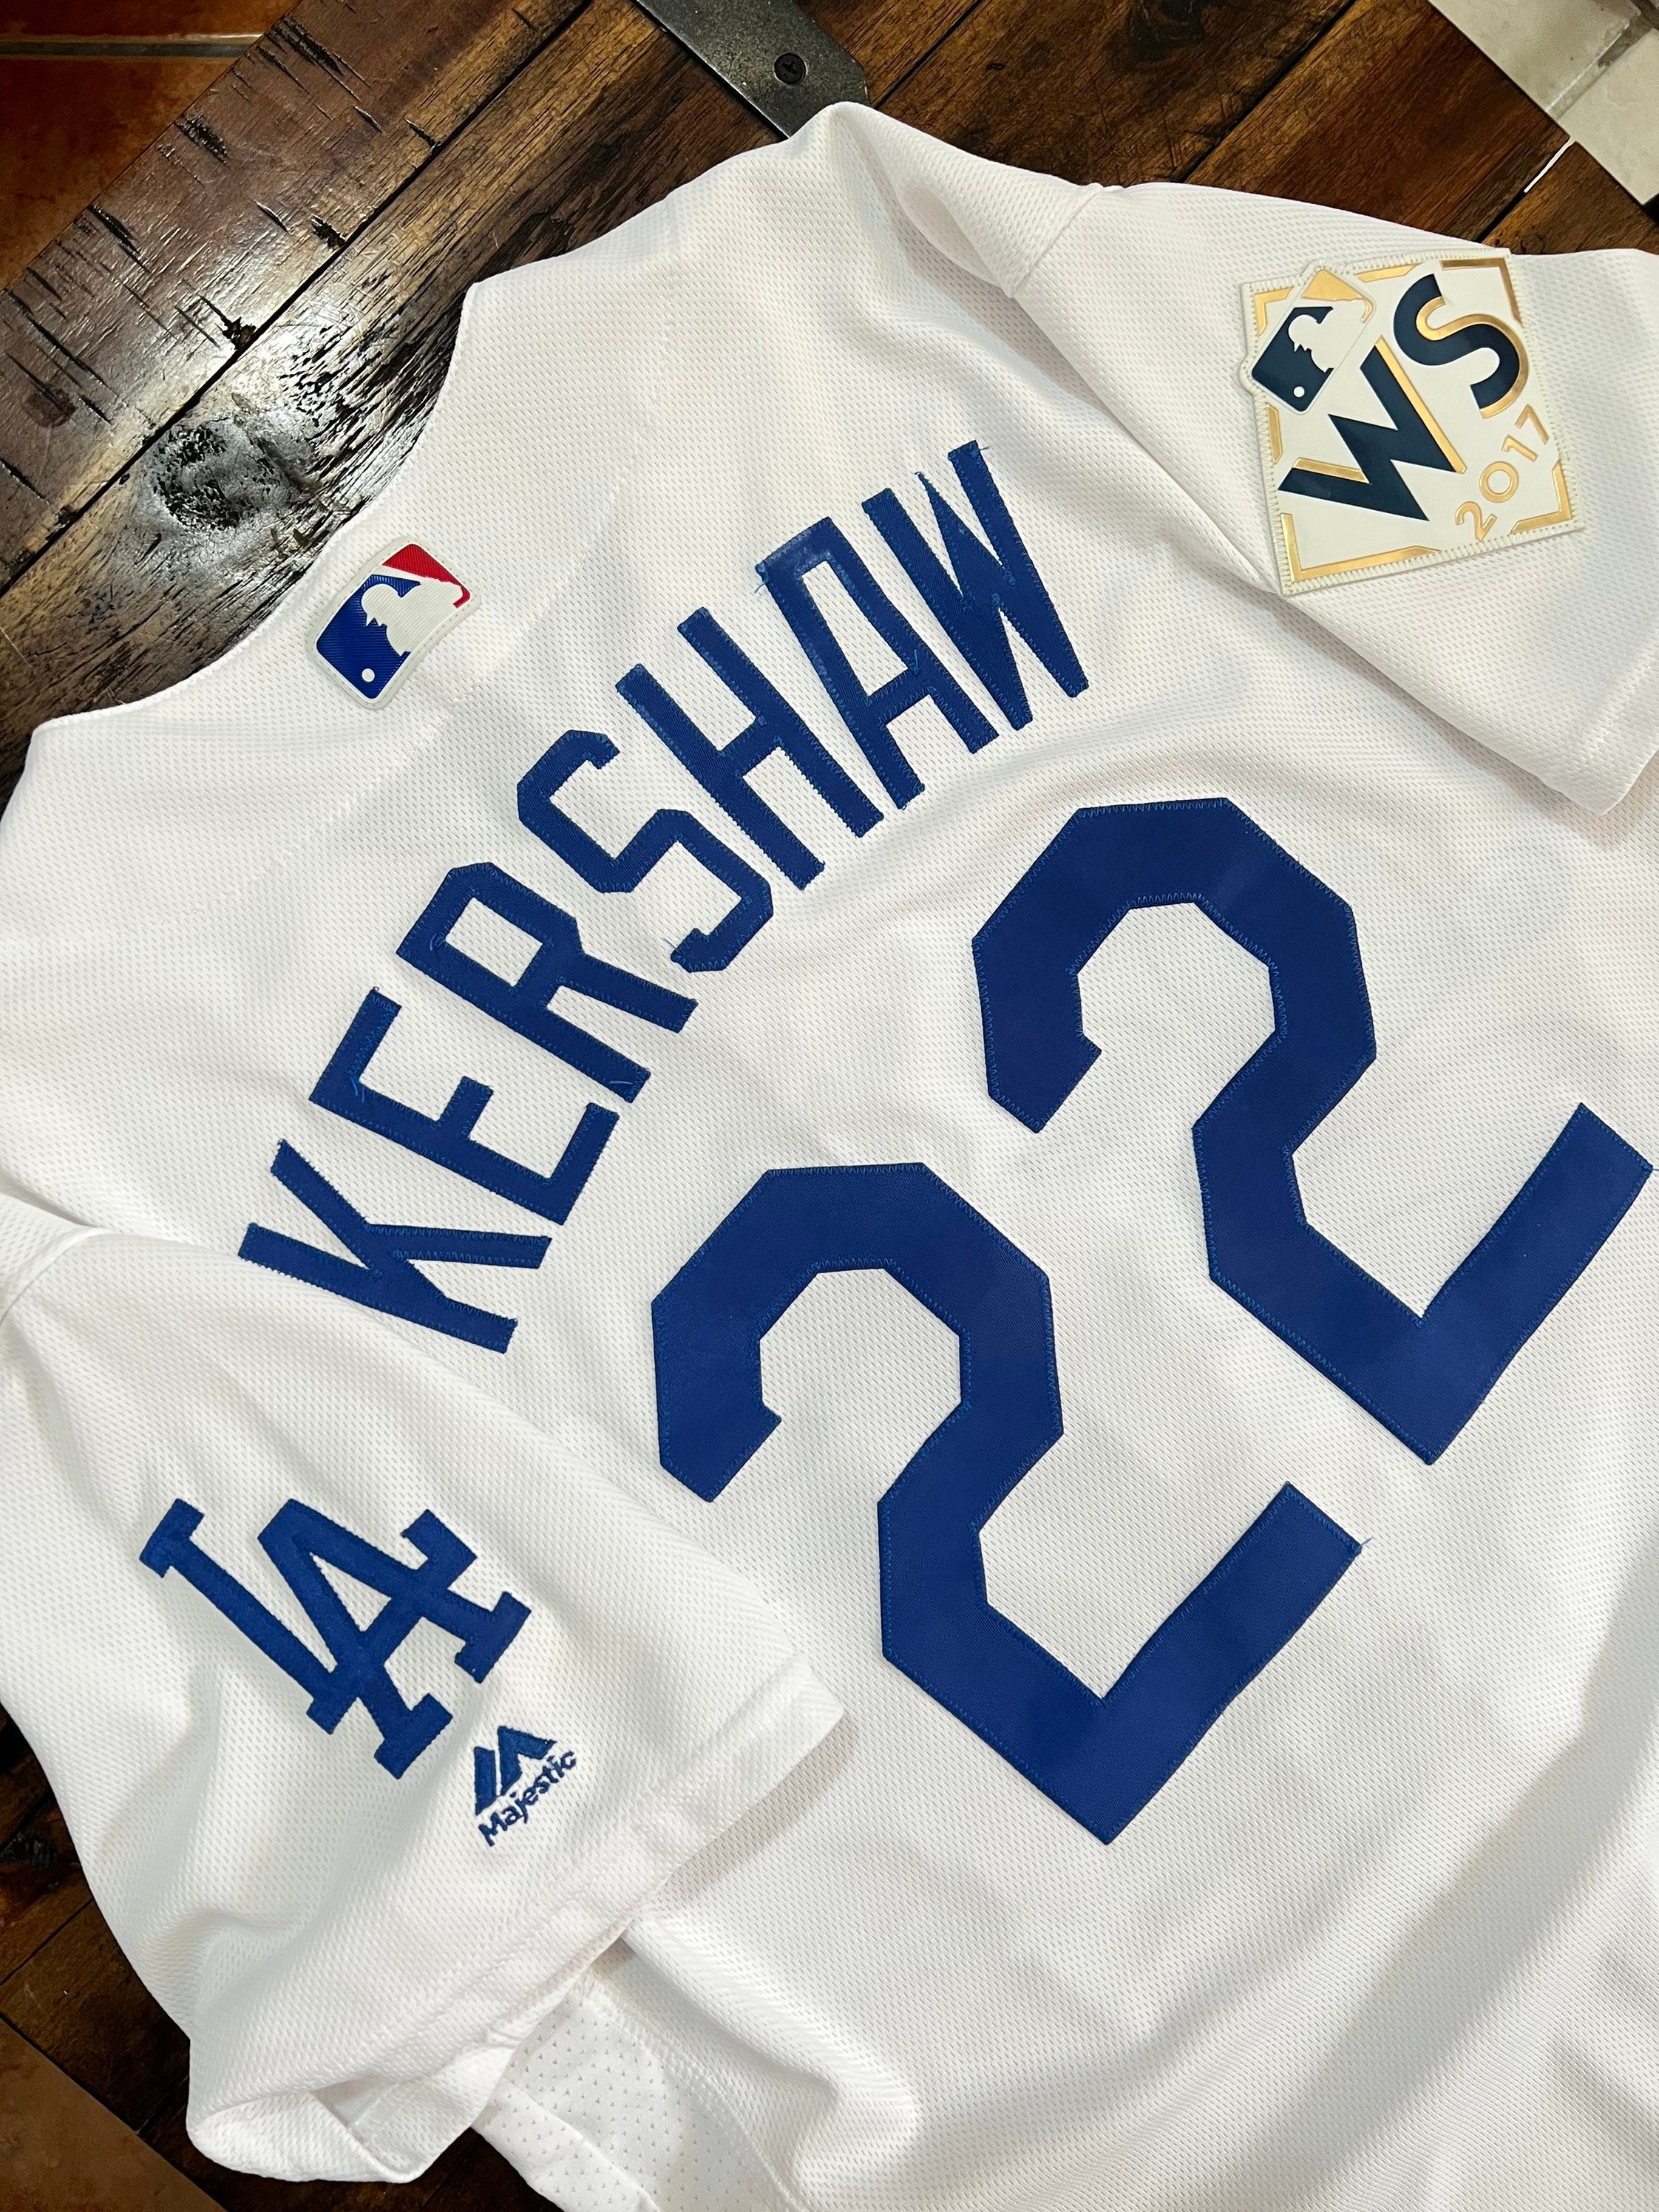 Clayton Kershaw Authentic LA Dodgers Gold Championship Jersey